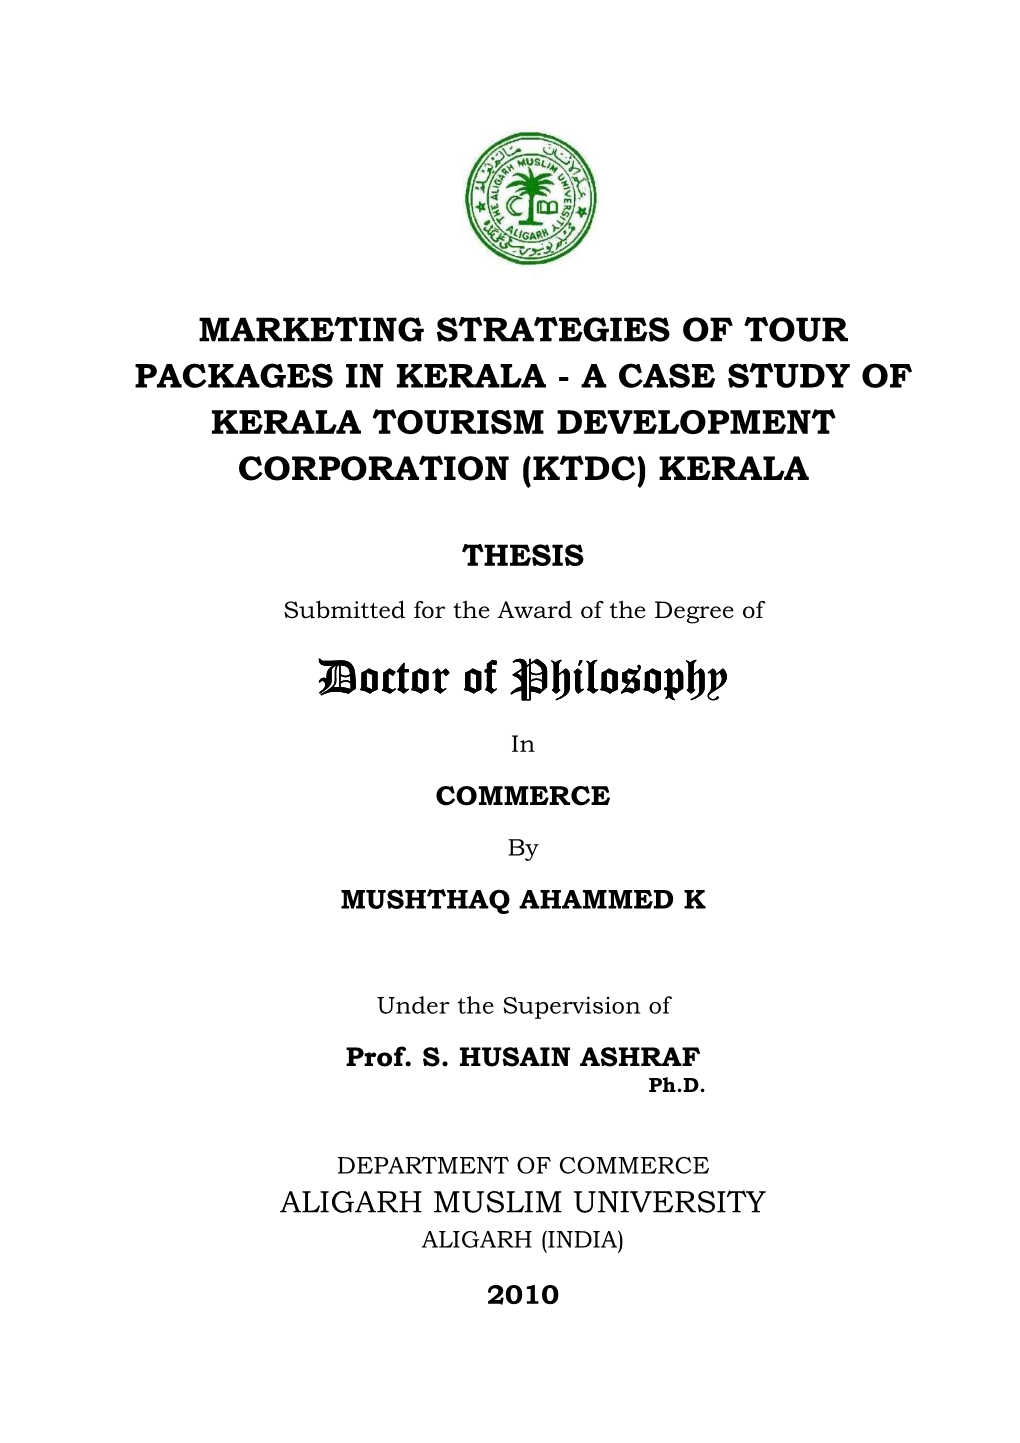 Marketing Strategies of Tour Packages in Kerala - a Case Study of Kerala Tourism Development Corporation (Ktdc) Kerala